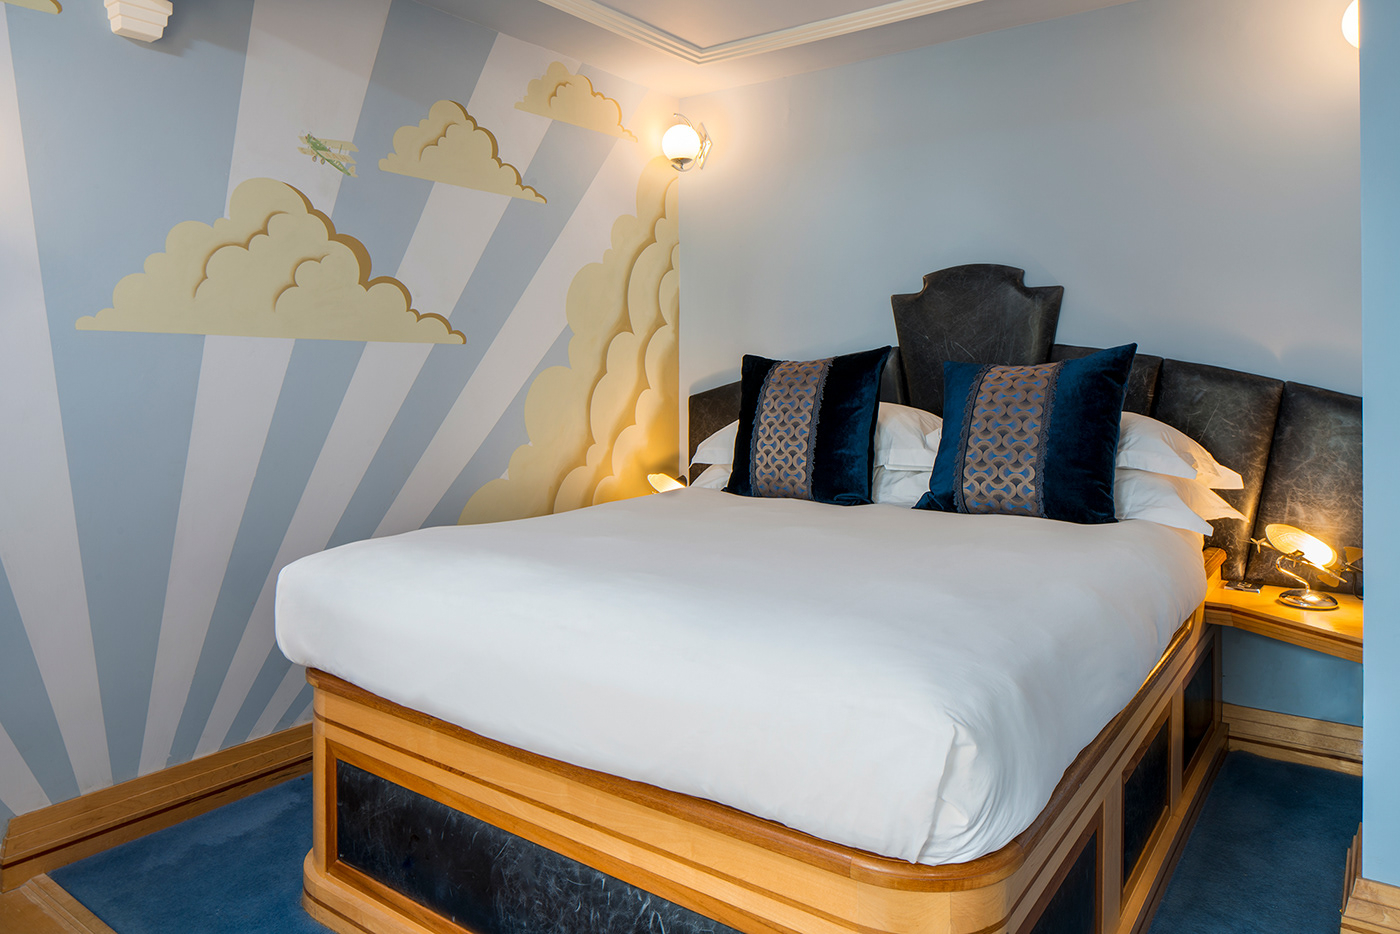 1930's agather christie art deco Bedrooms Burgh Island devon Hospitality hotel interiors refurbish